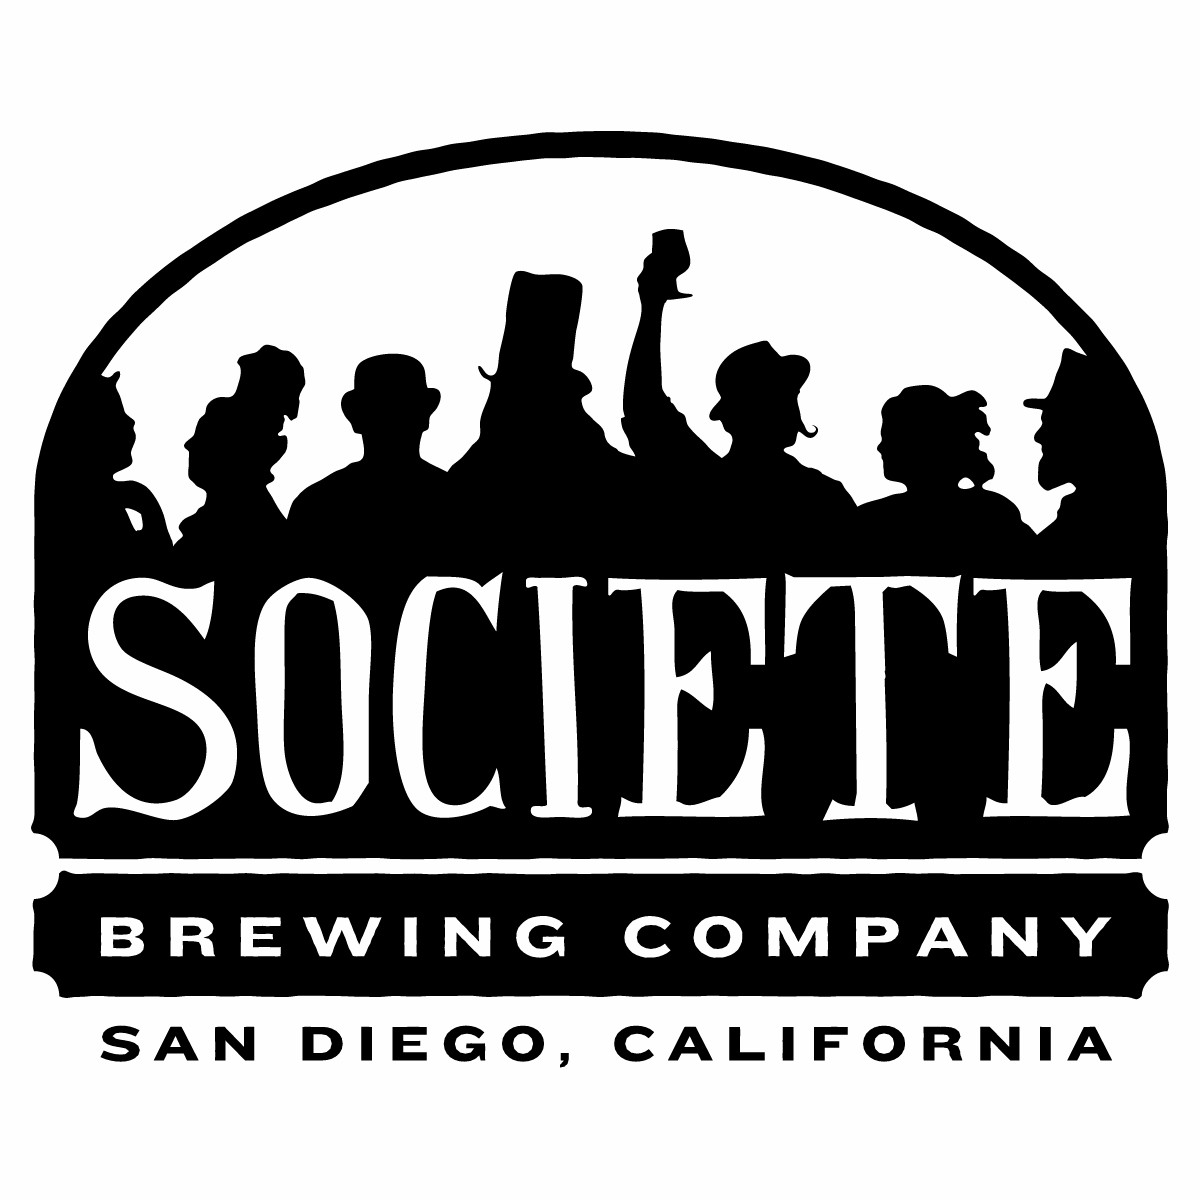 Societe brewing company